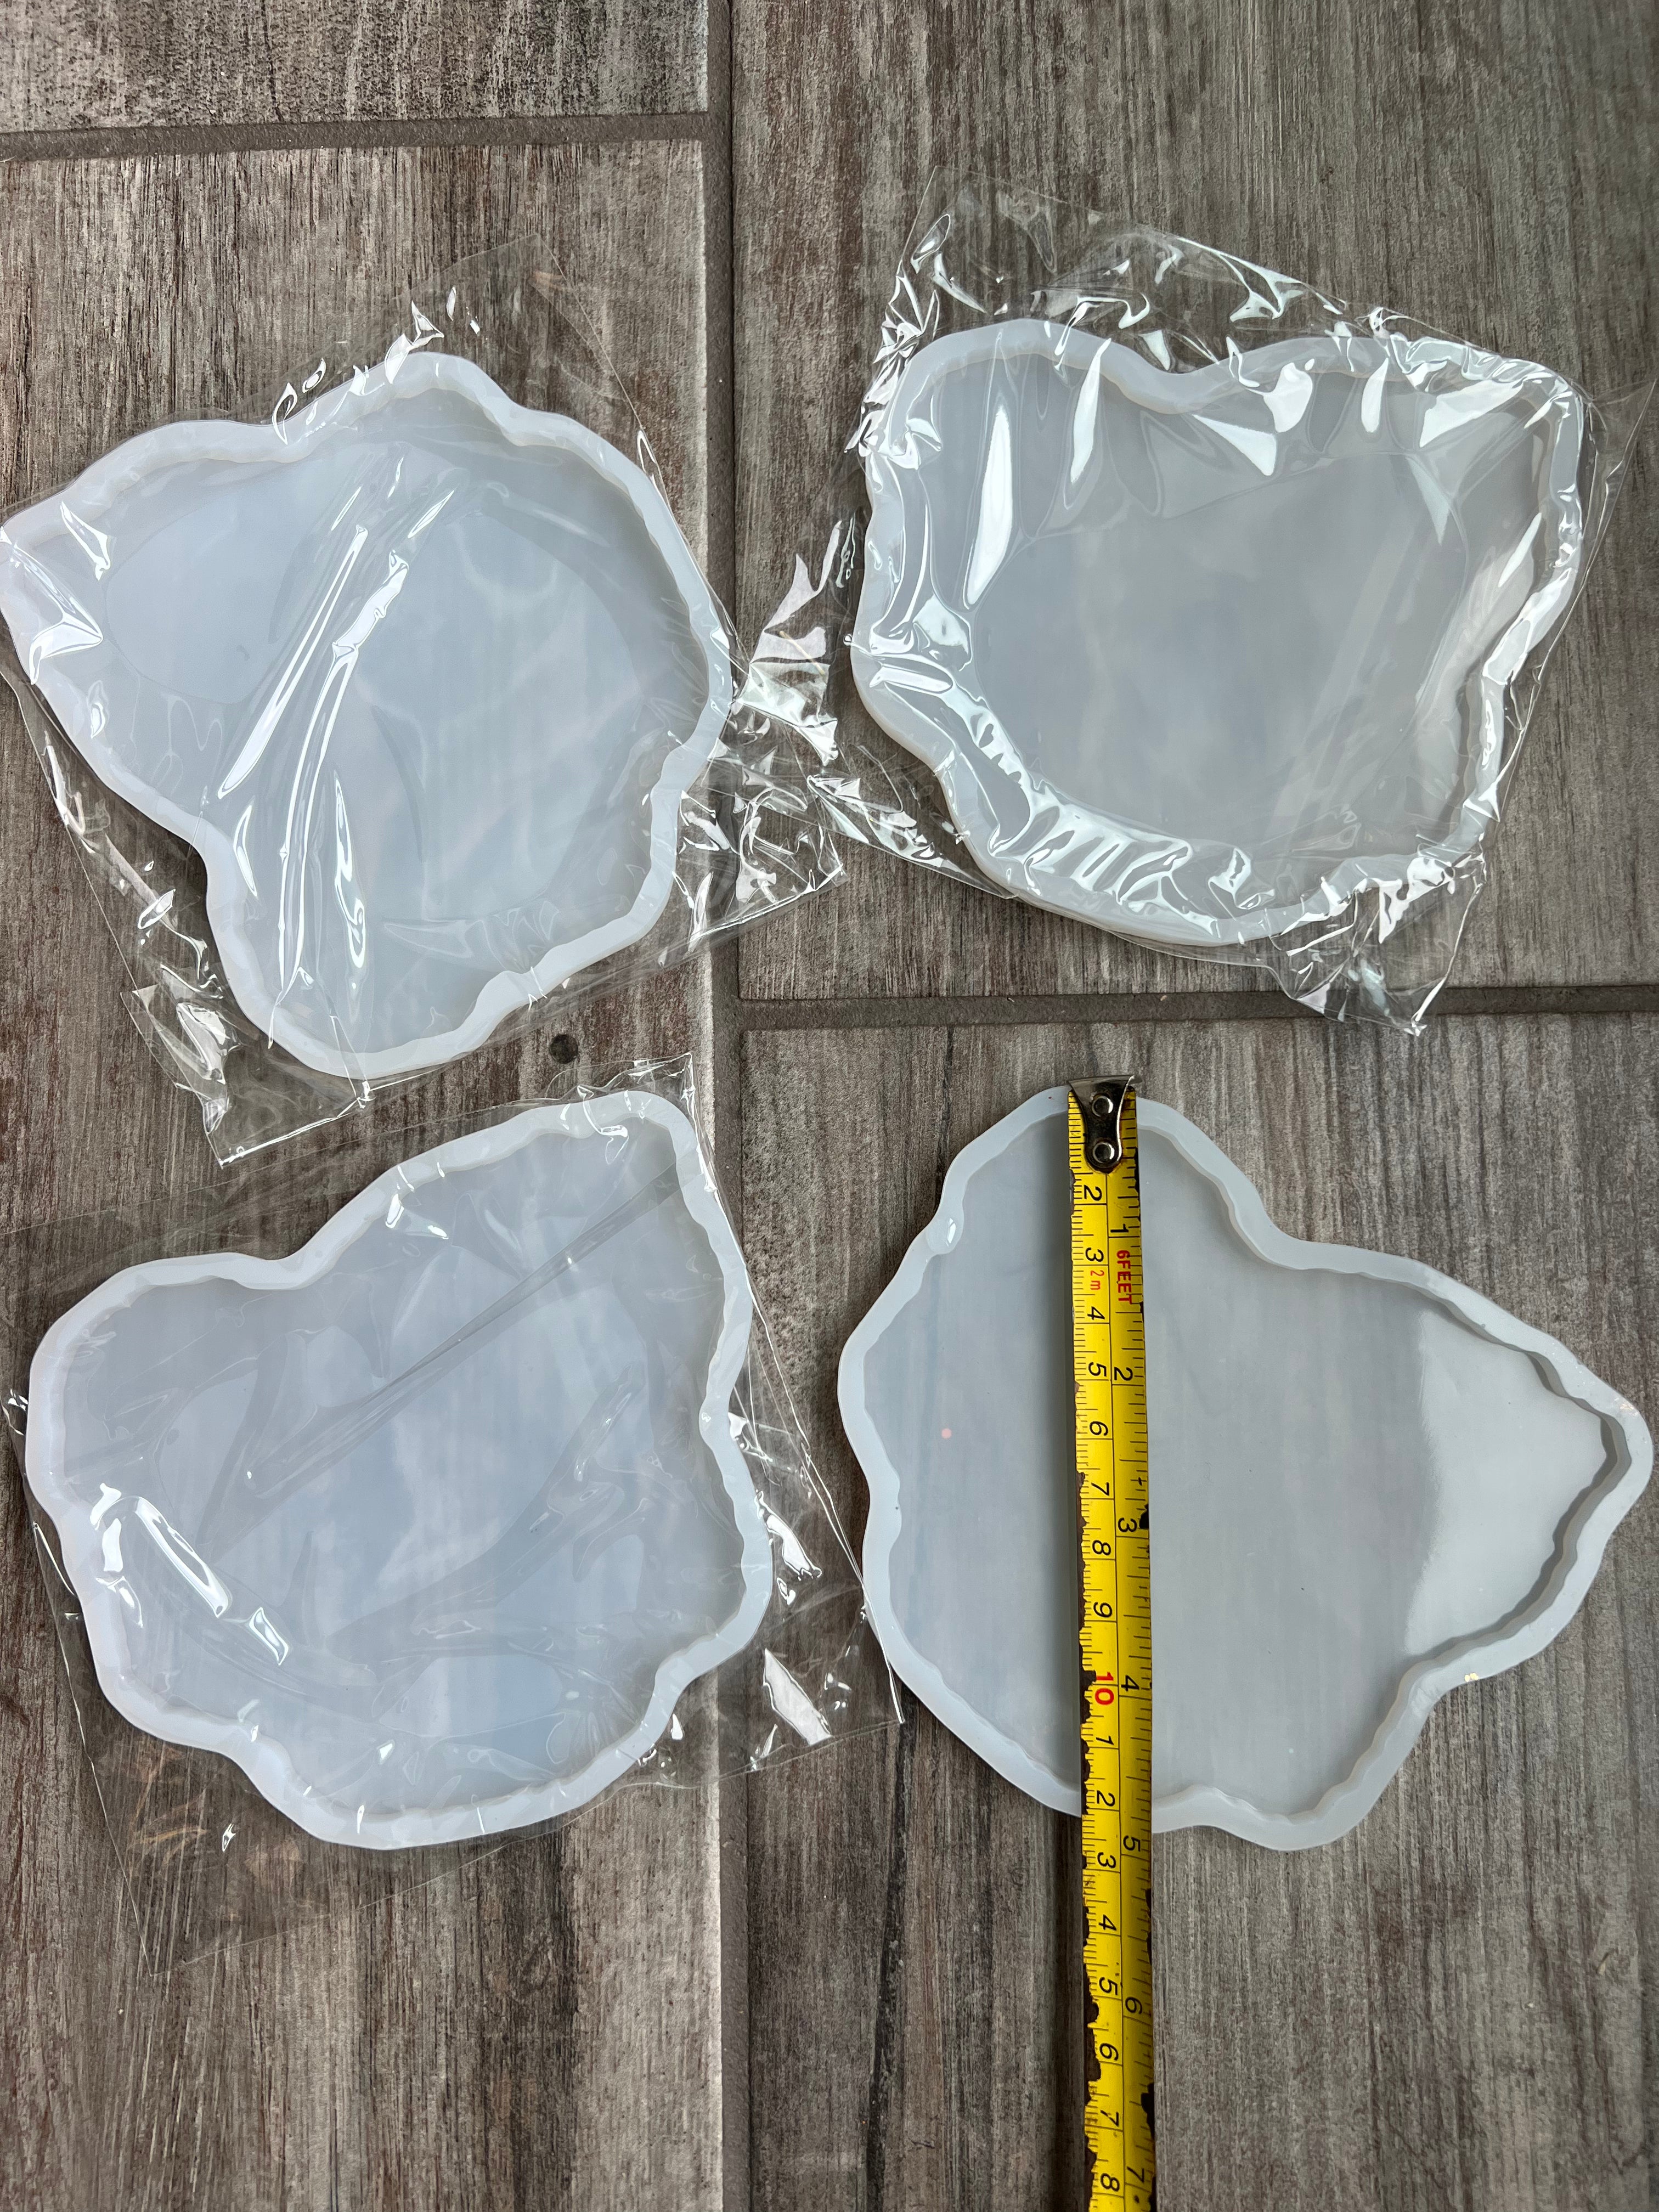 Geode Slice Silicone Resin Coaster Mold Set – Phoenix